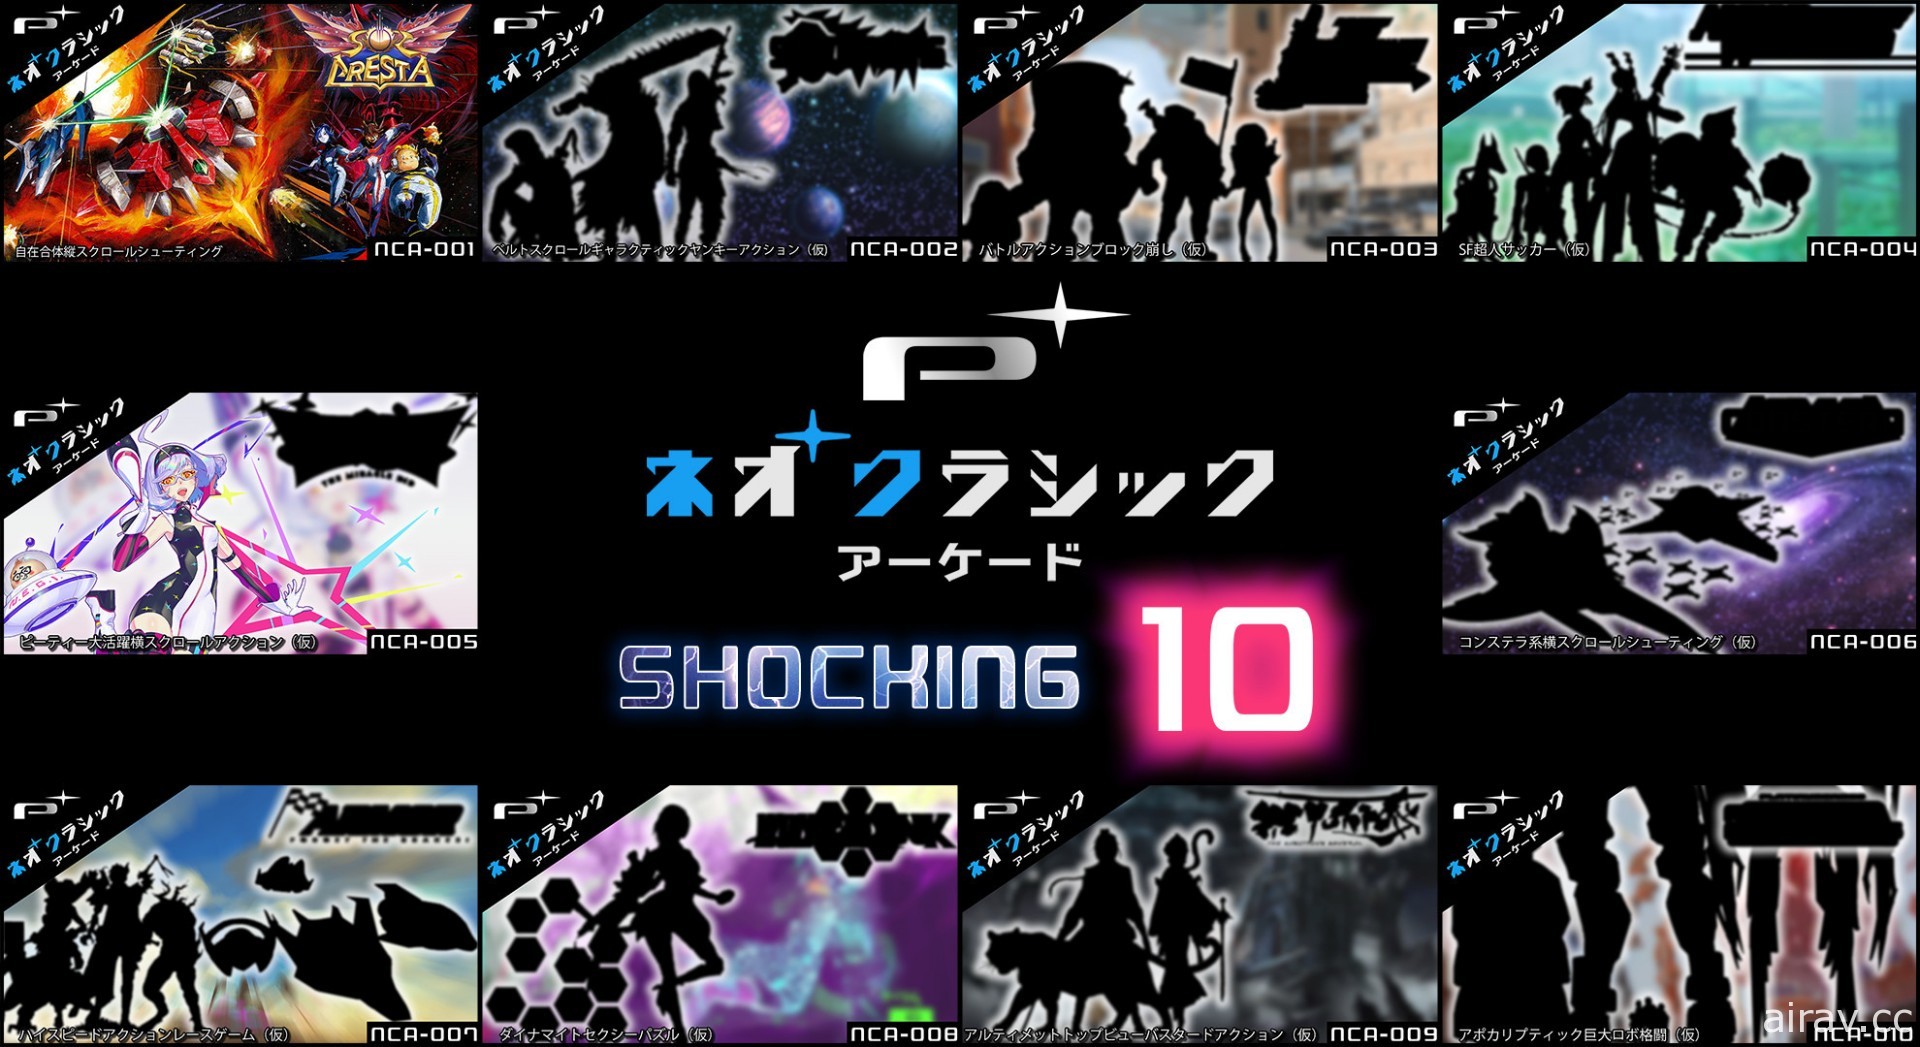 PlatinumGames 發表 “Neo-Classic Arcade” 系列「Shocking 10」新作遊戲陣容